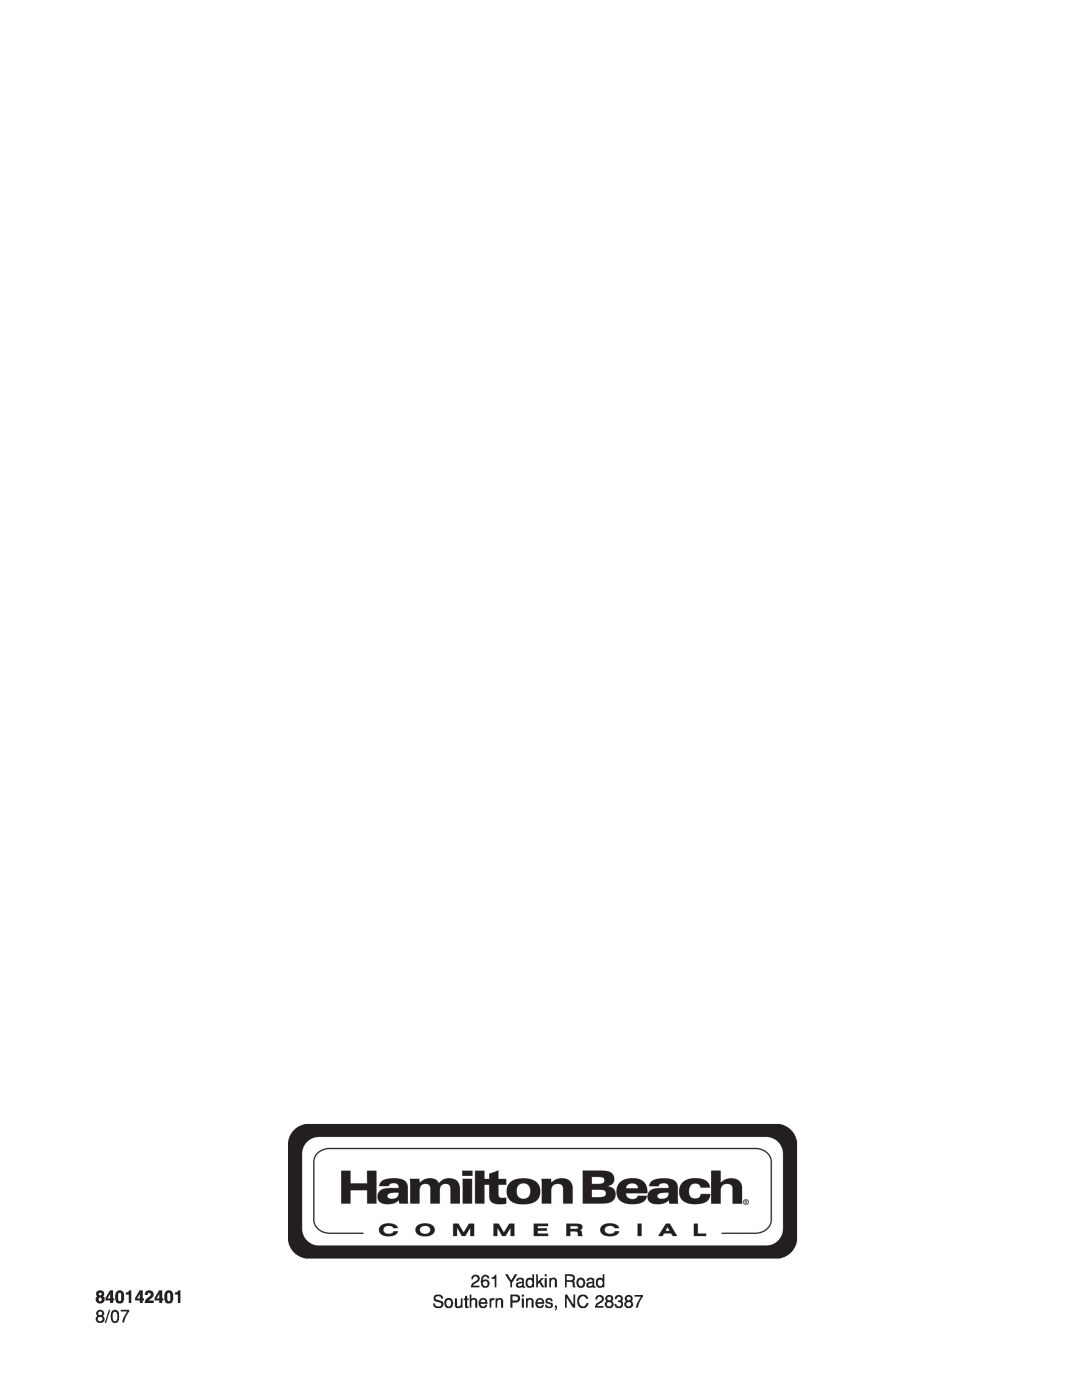 Hamilton Beach HBB250S manuel dutilisation 840142401, Yadkin Road, Southern Pines, NC, 8/07 